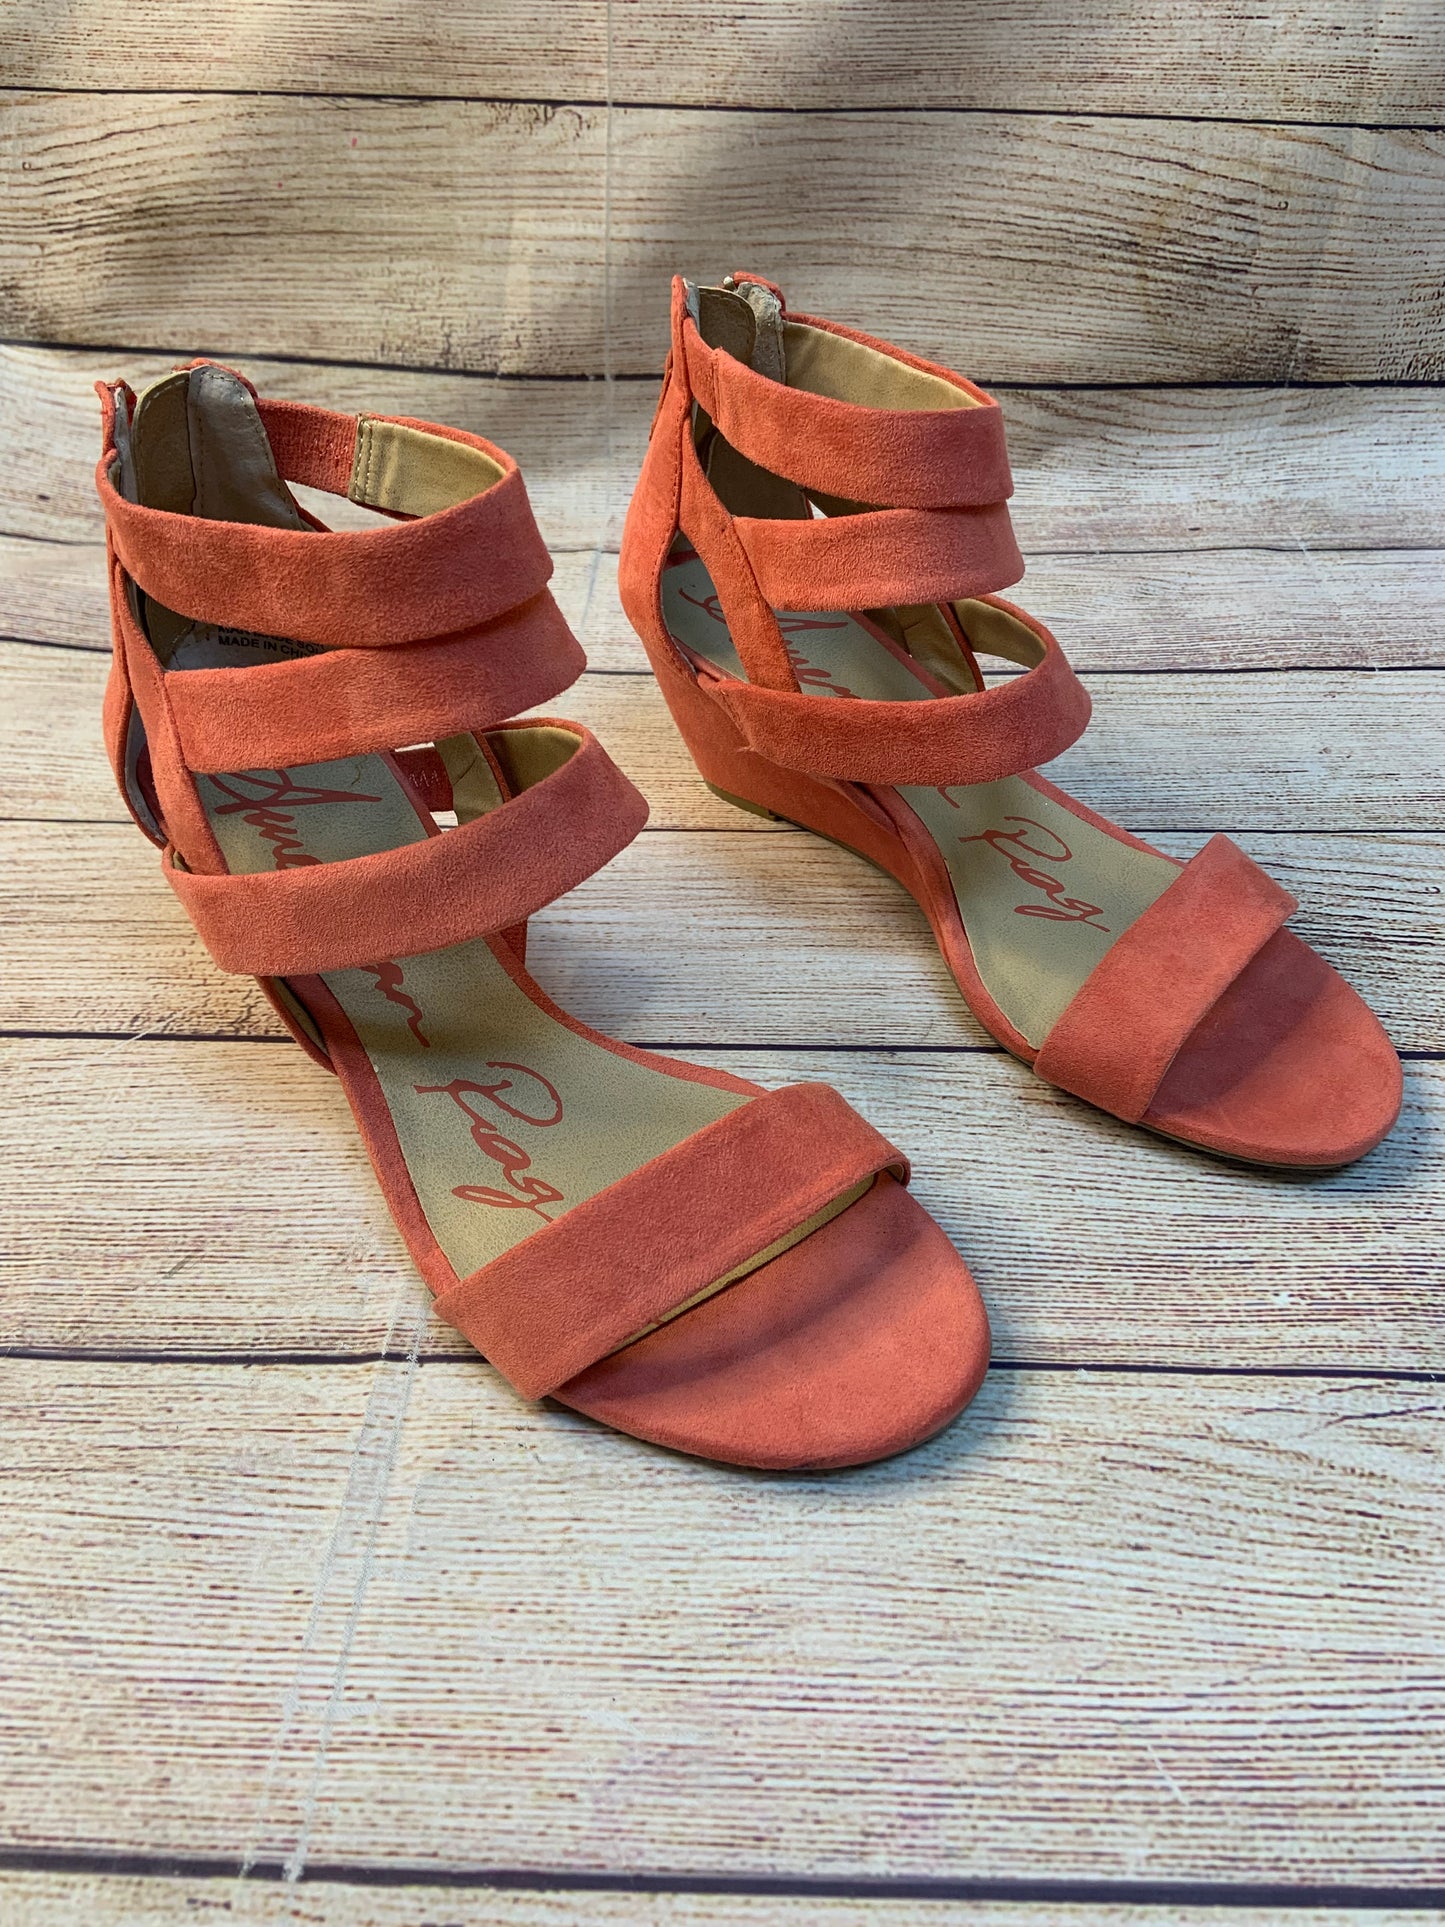 Sandals Heels Wedge By American Rag  Size: 6.5